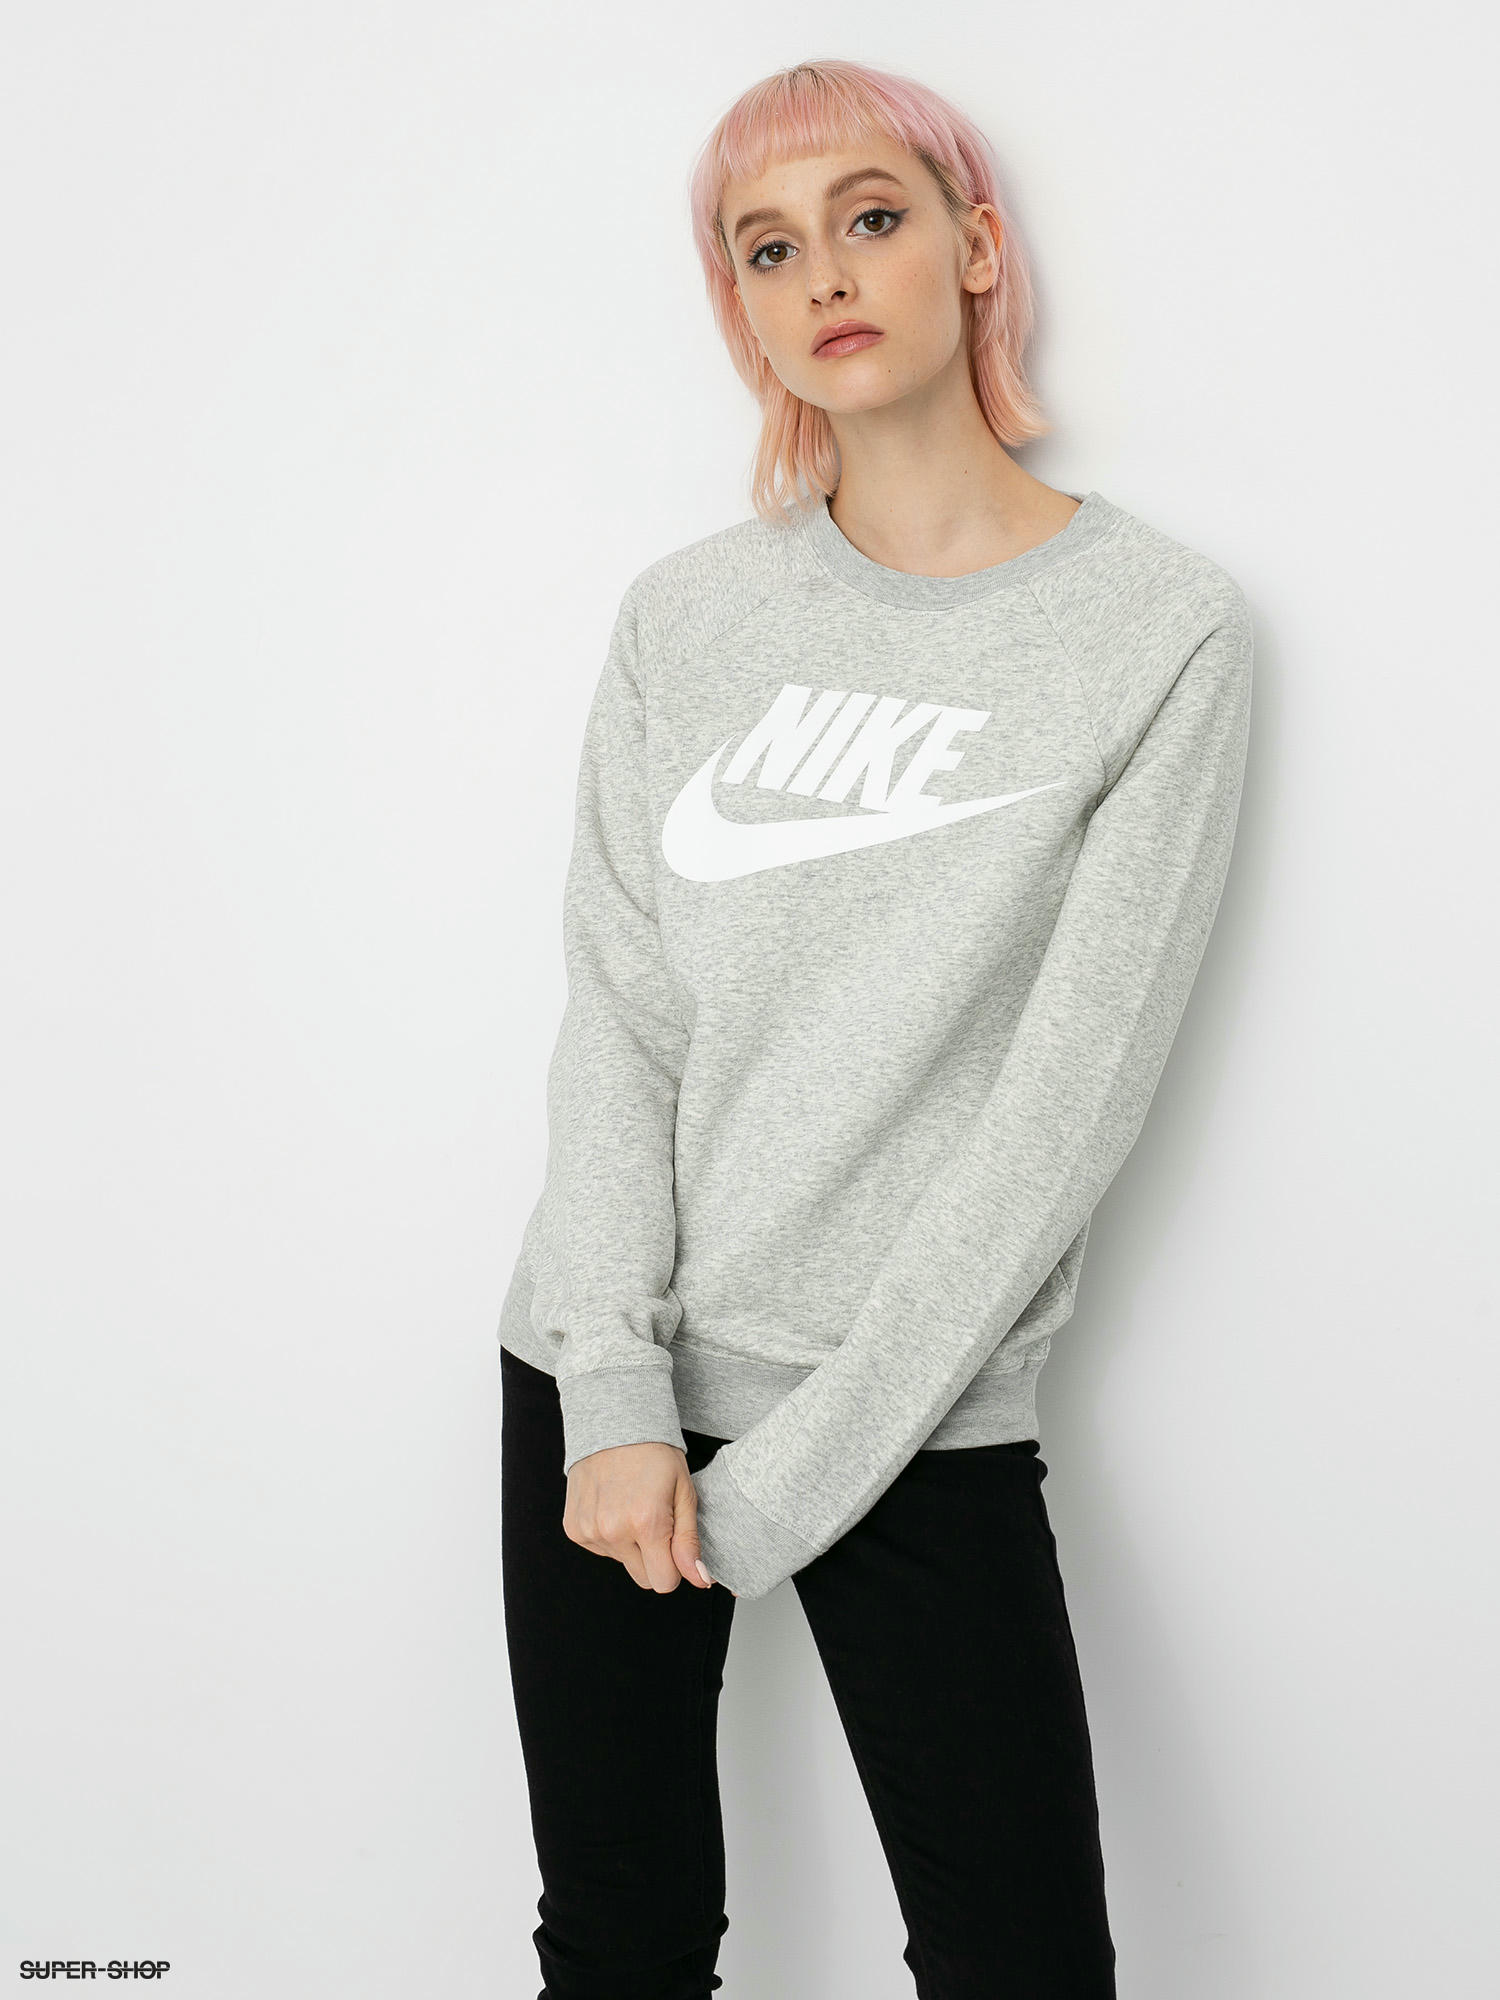 https://static.super-shop.com/1187048-nike-sportswear-rally-sweatshirt-wmn-grey-heather-white.jpg?w=1920